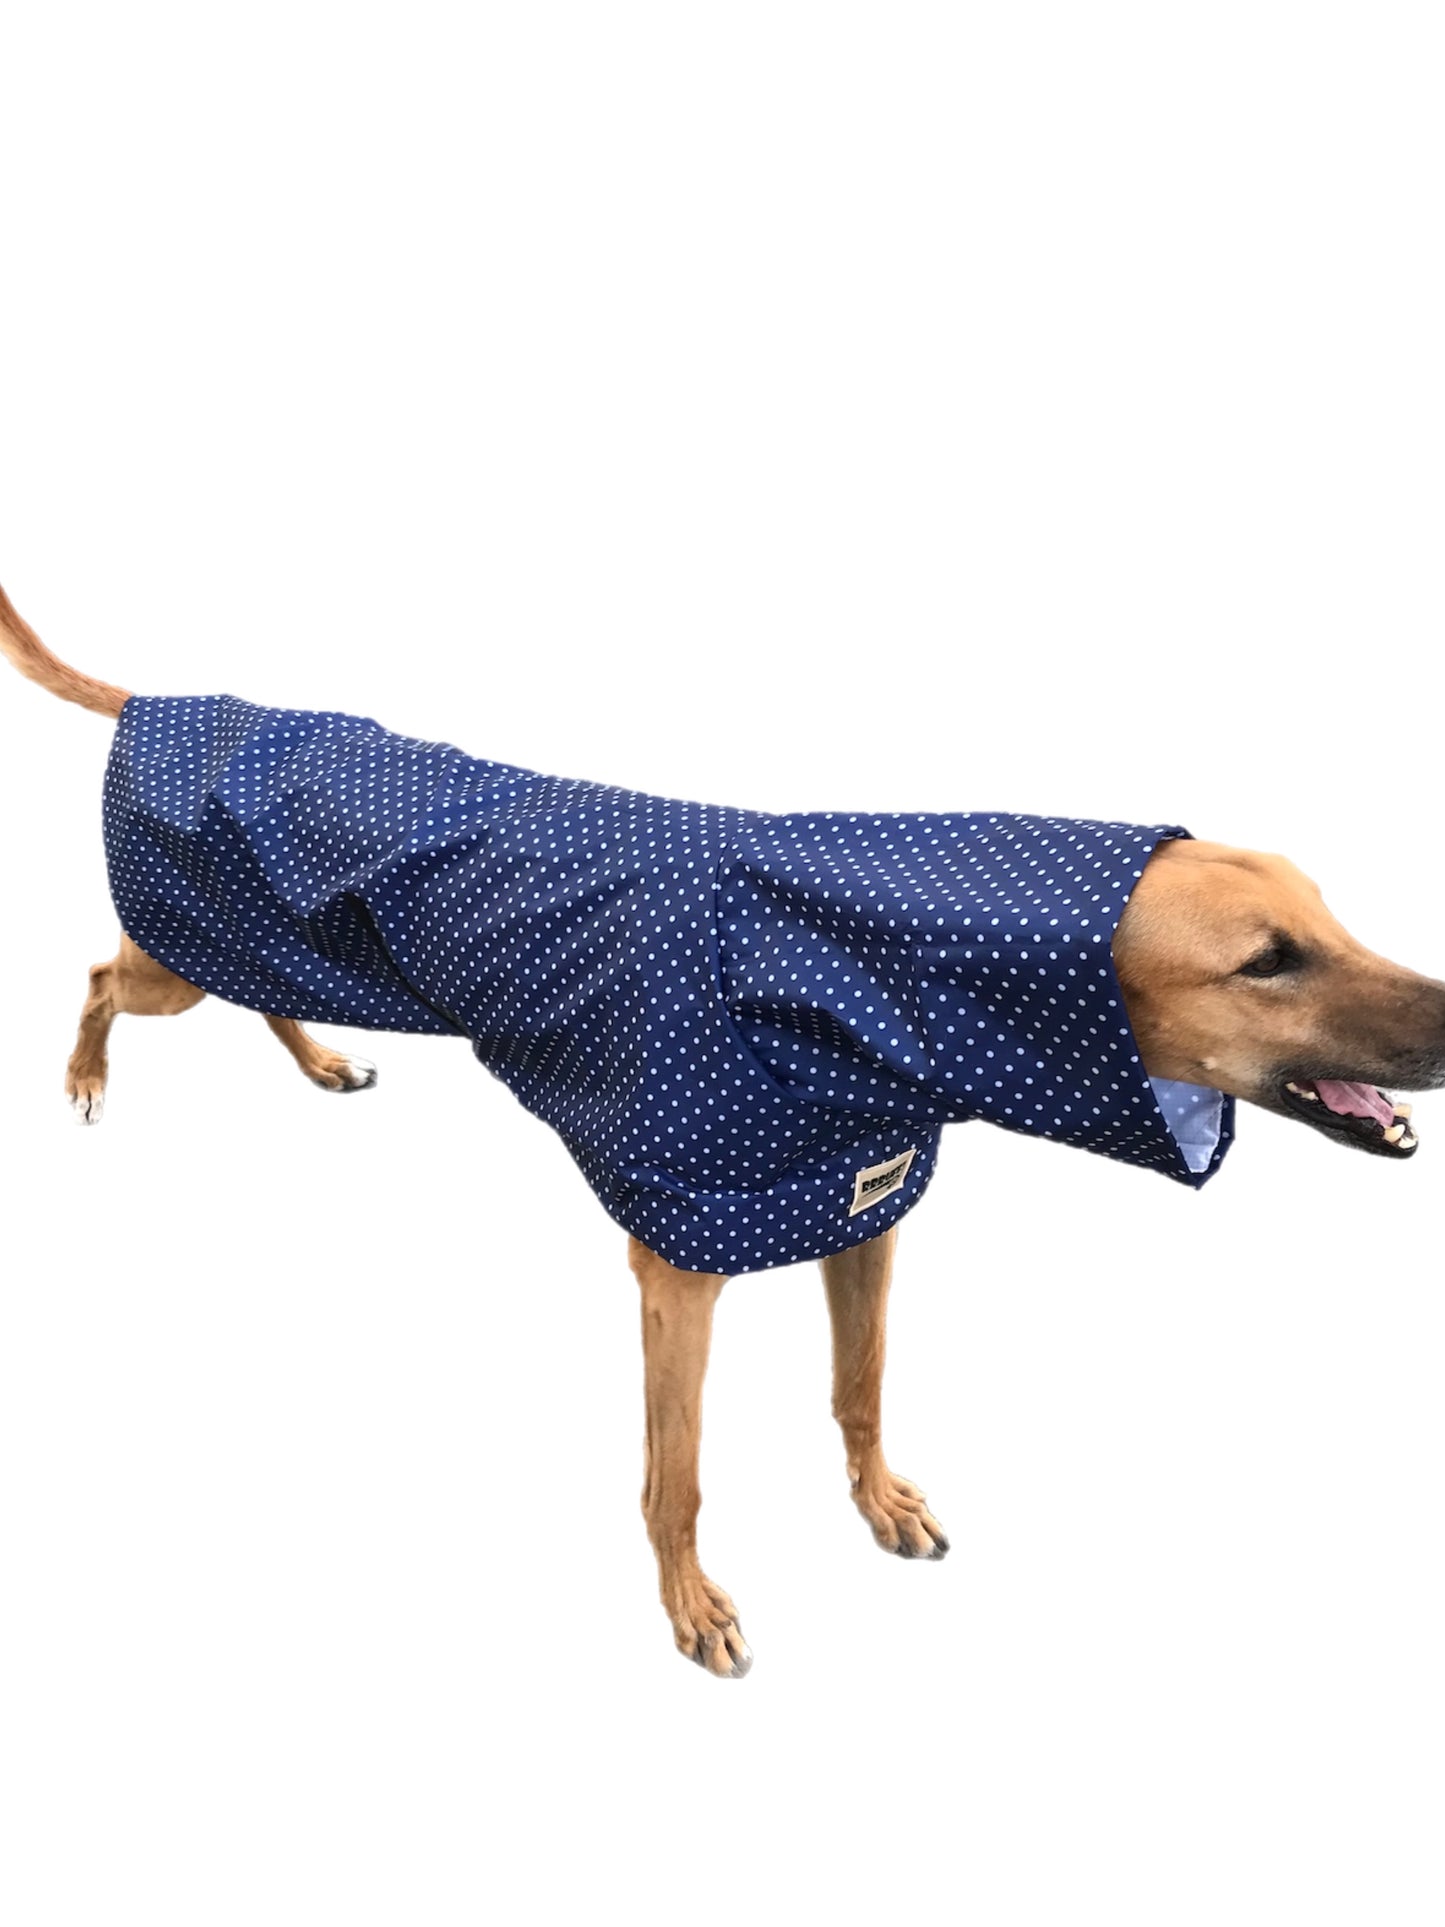 Navy blue dotty prints Greyhound coat deluxe style, summer rainwear, washable